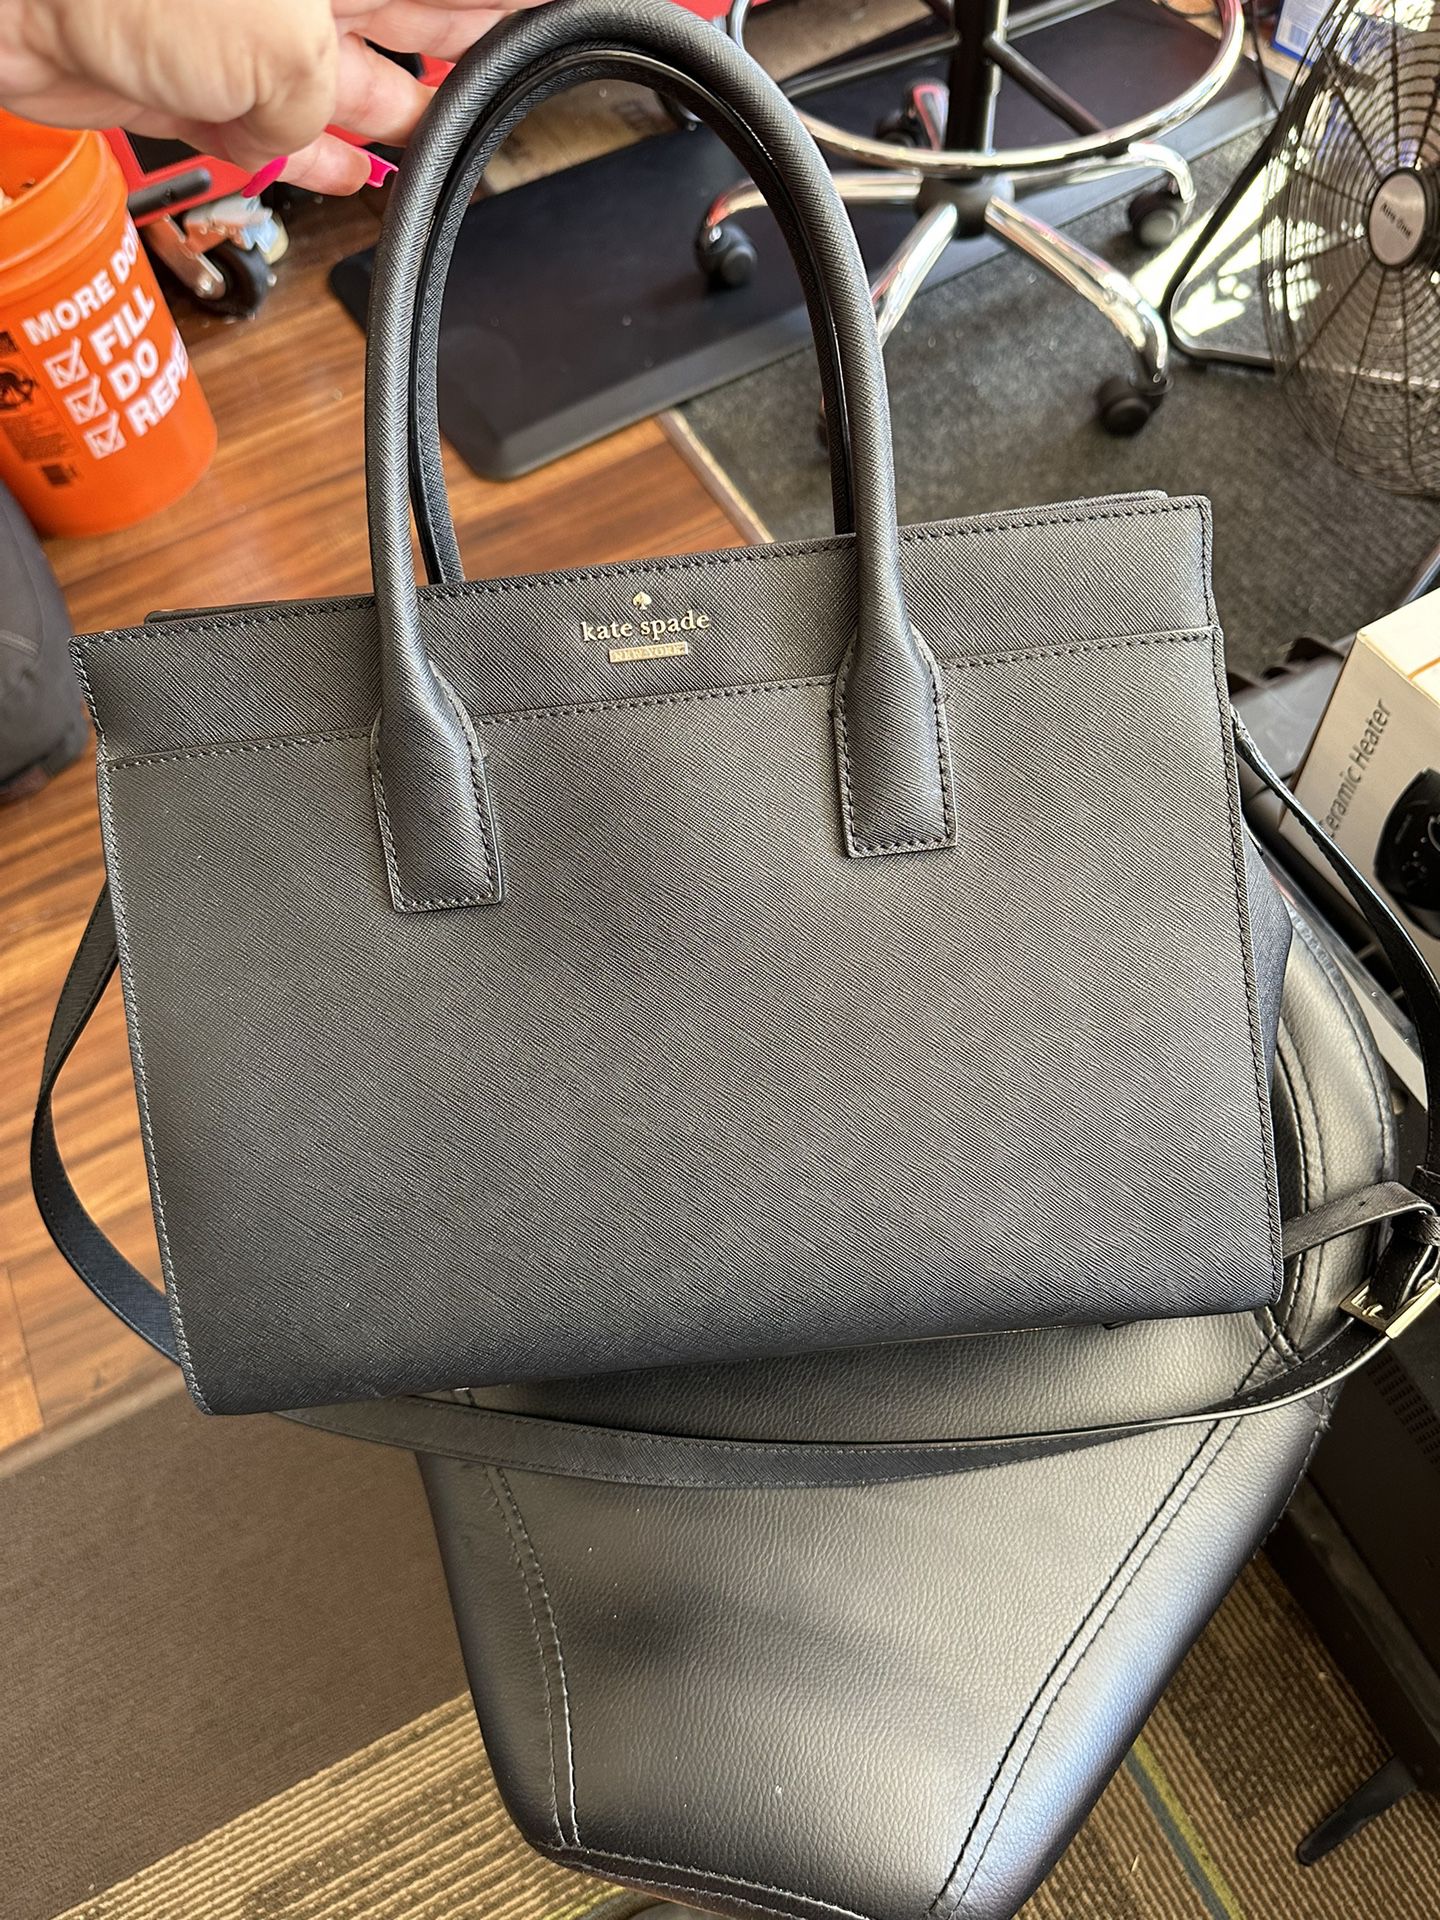 Louis Vuitton Handbag for Sale in Santa Ana, CA - OfferUp